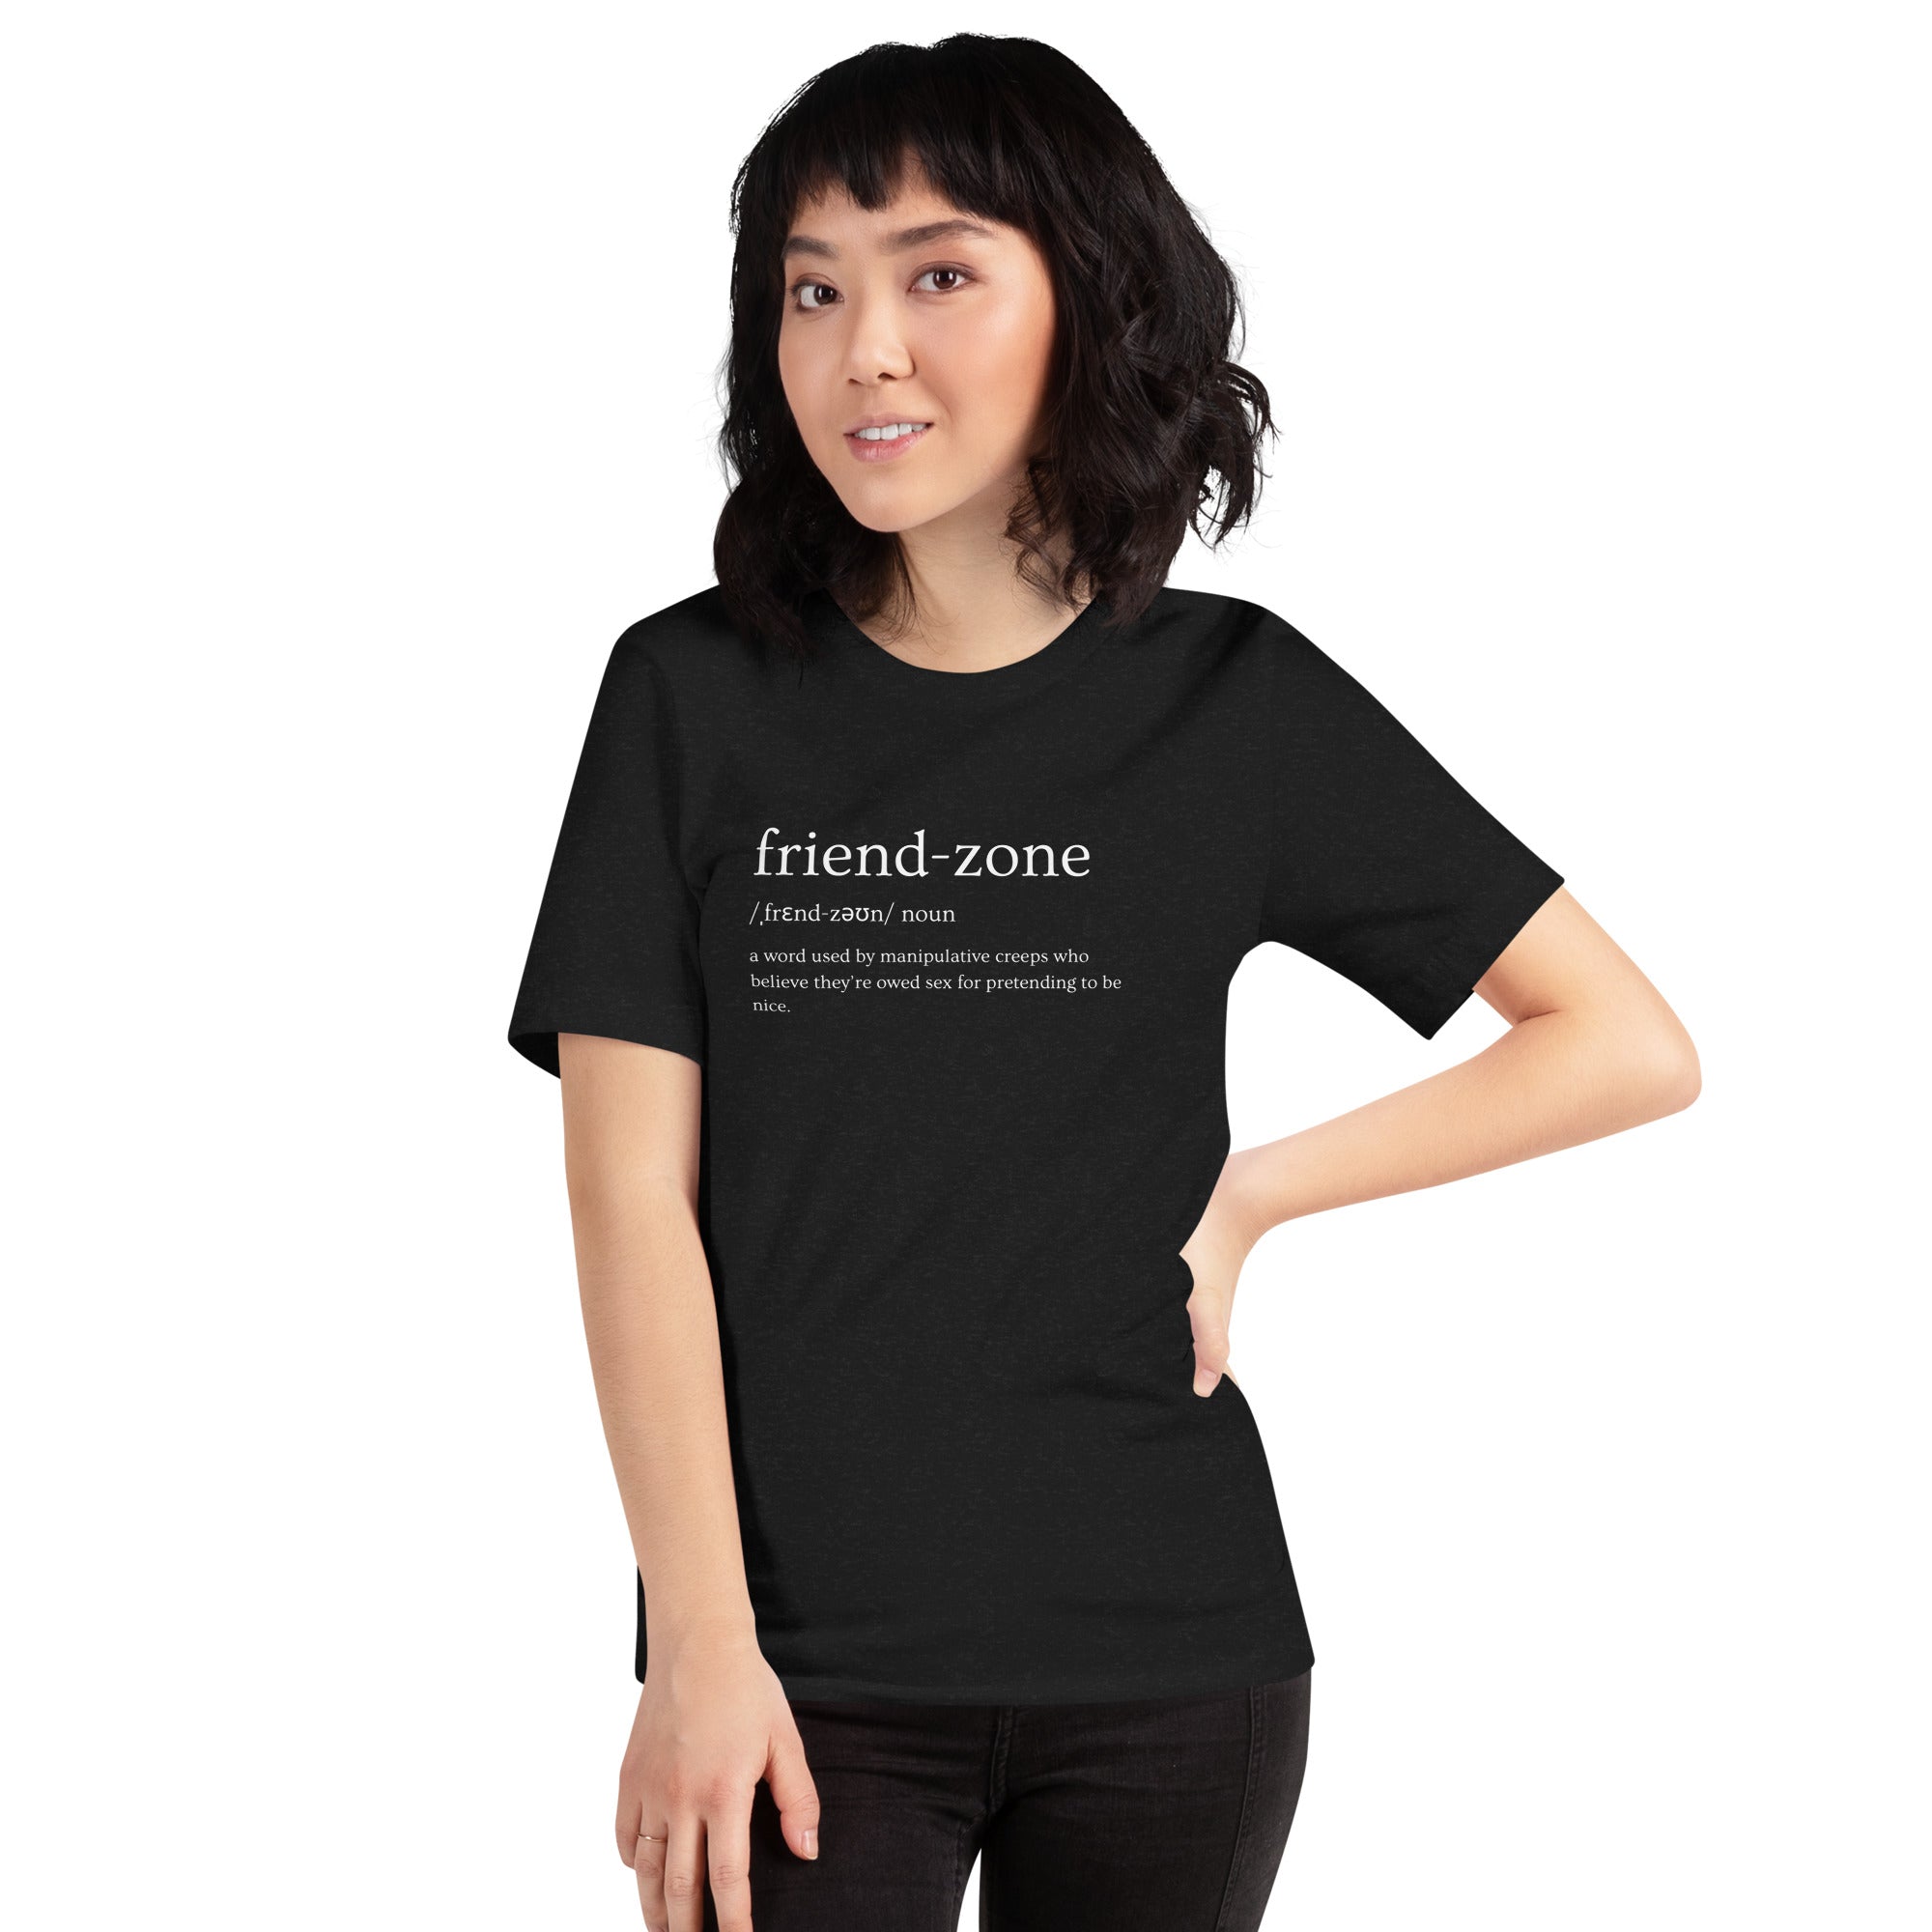 Friend-zone Definition unisex t-shirt